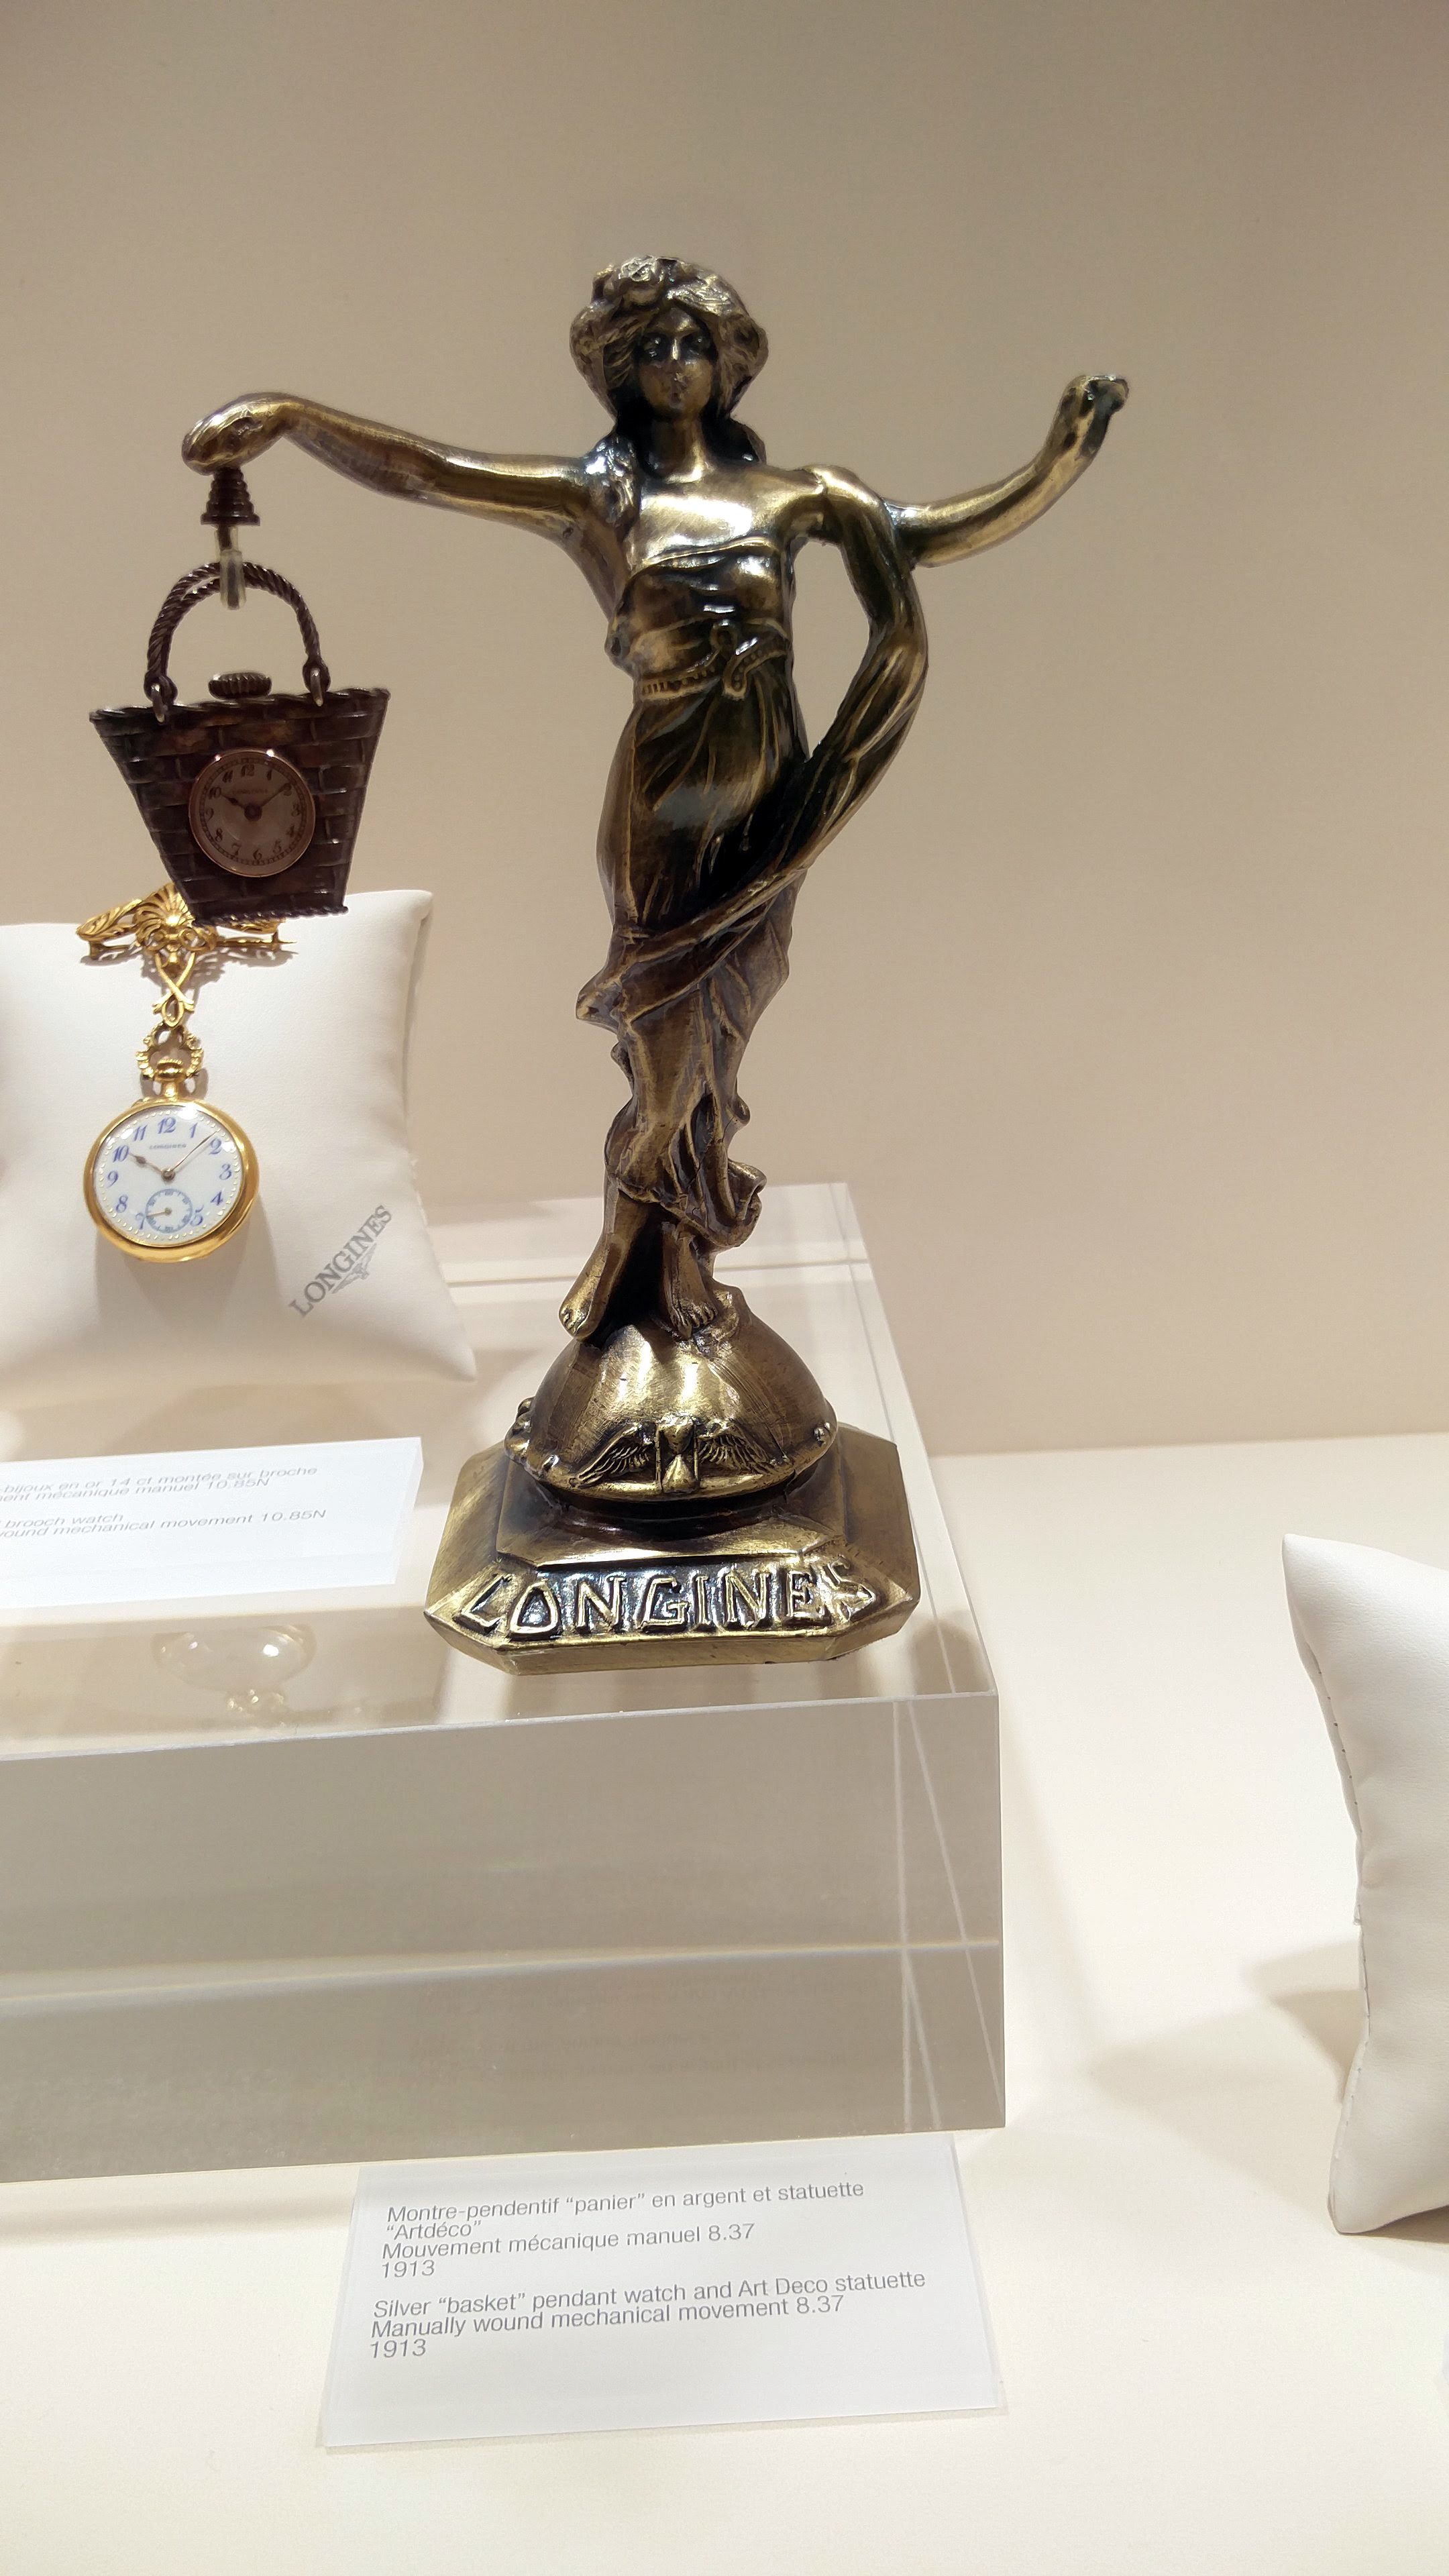 Silver “basket” pendant watch, and Art Deco statuette 